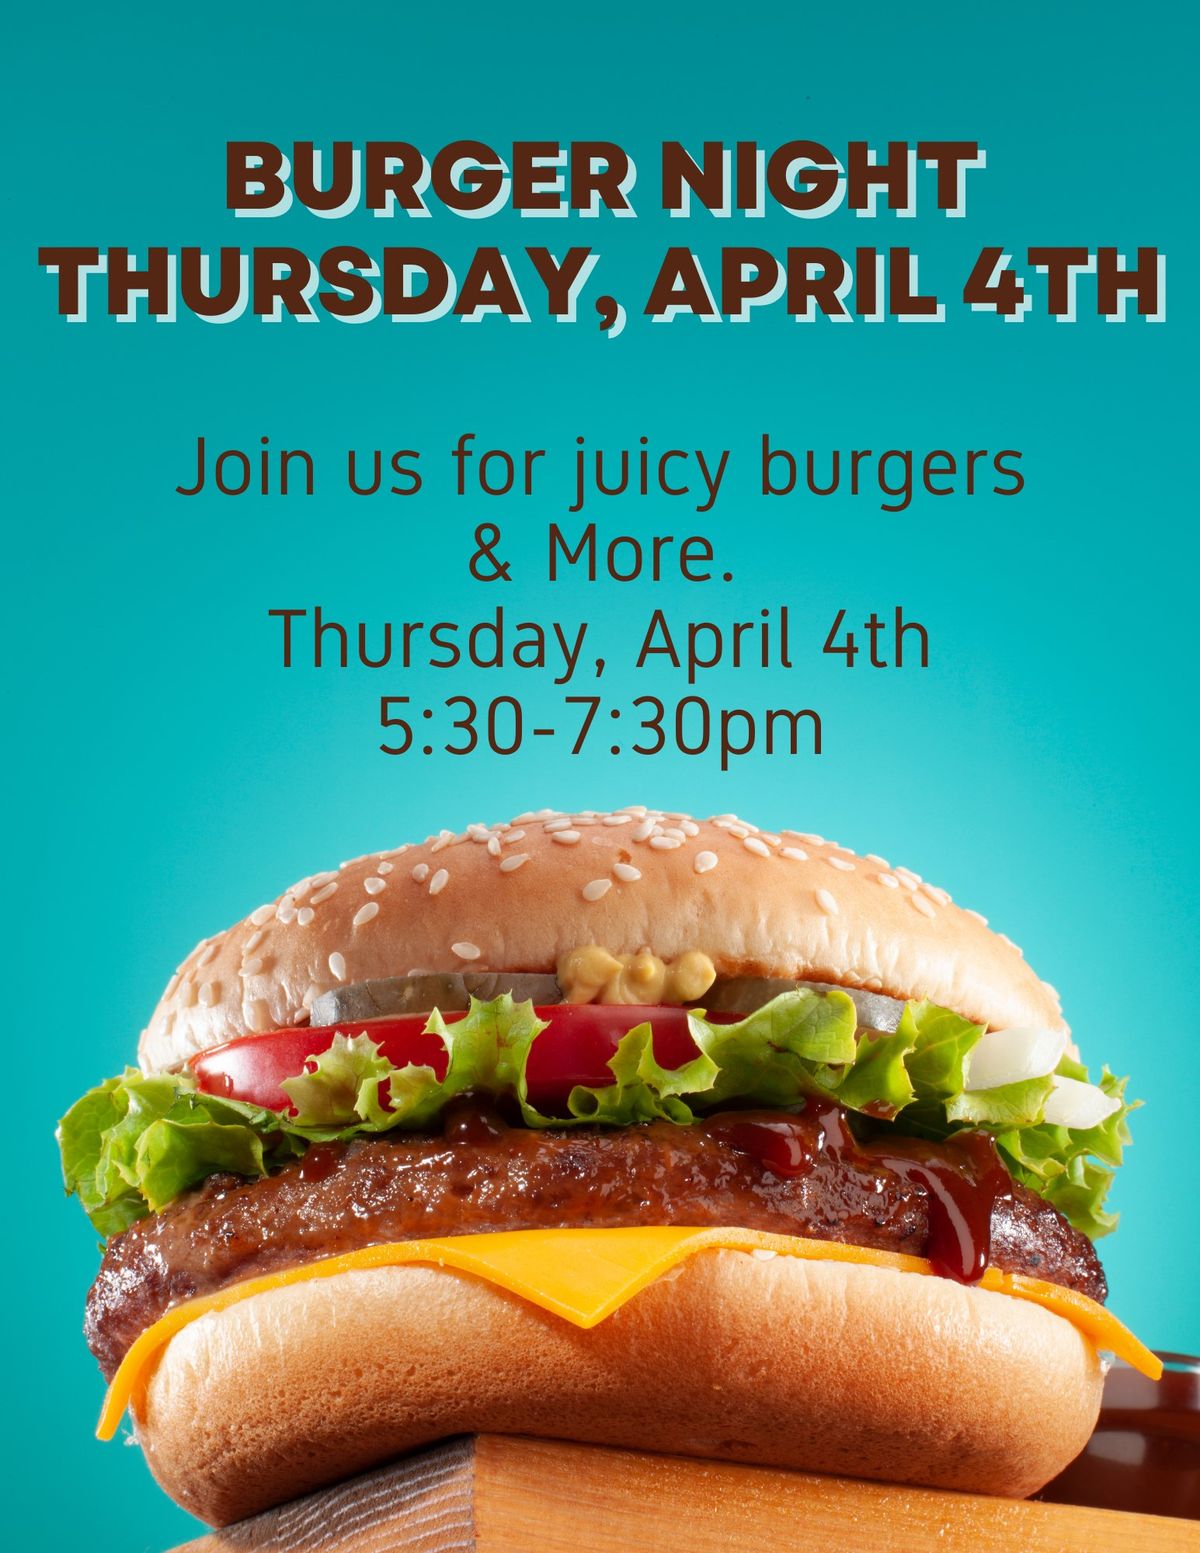 Burgers & More Night at the Moose Lodge Thursday, May 2nd 4th